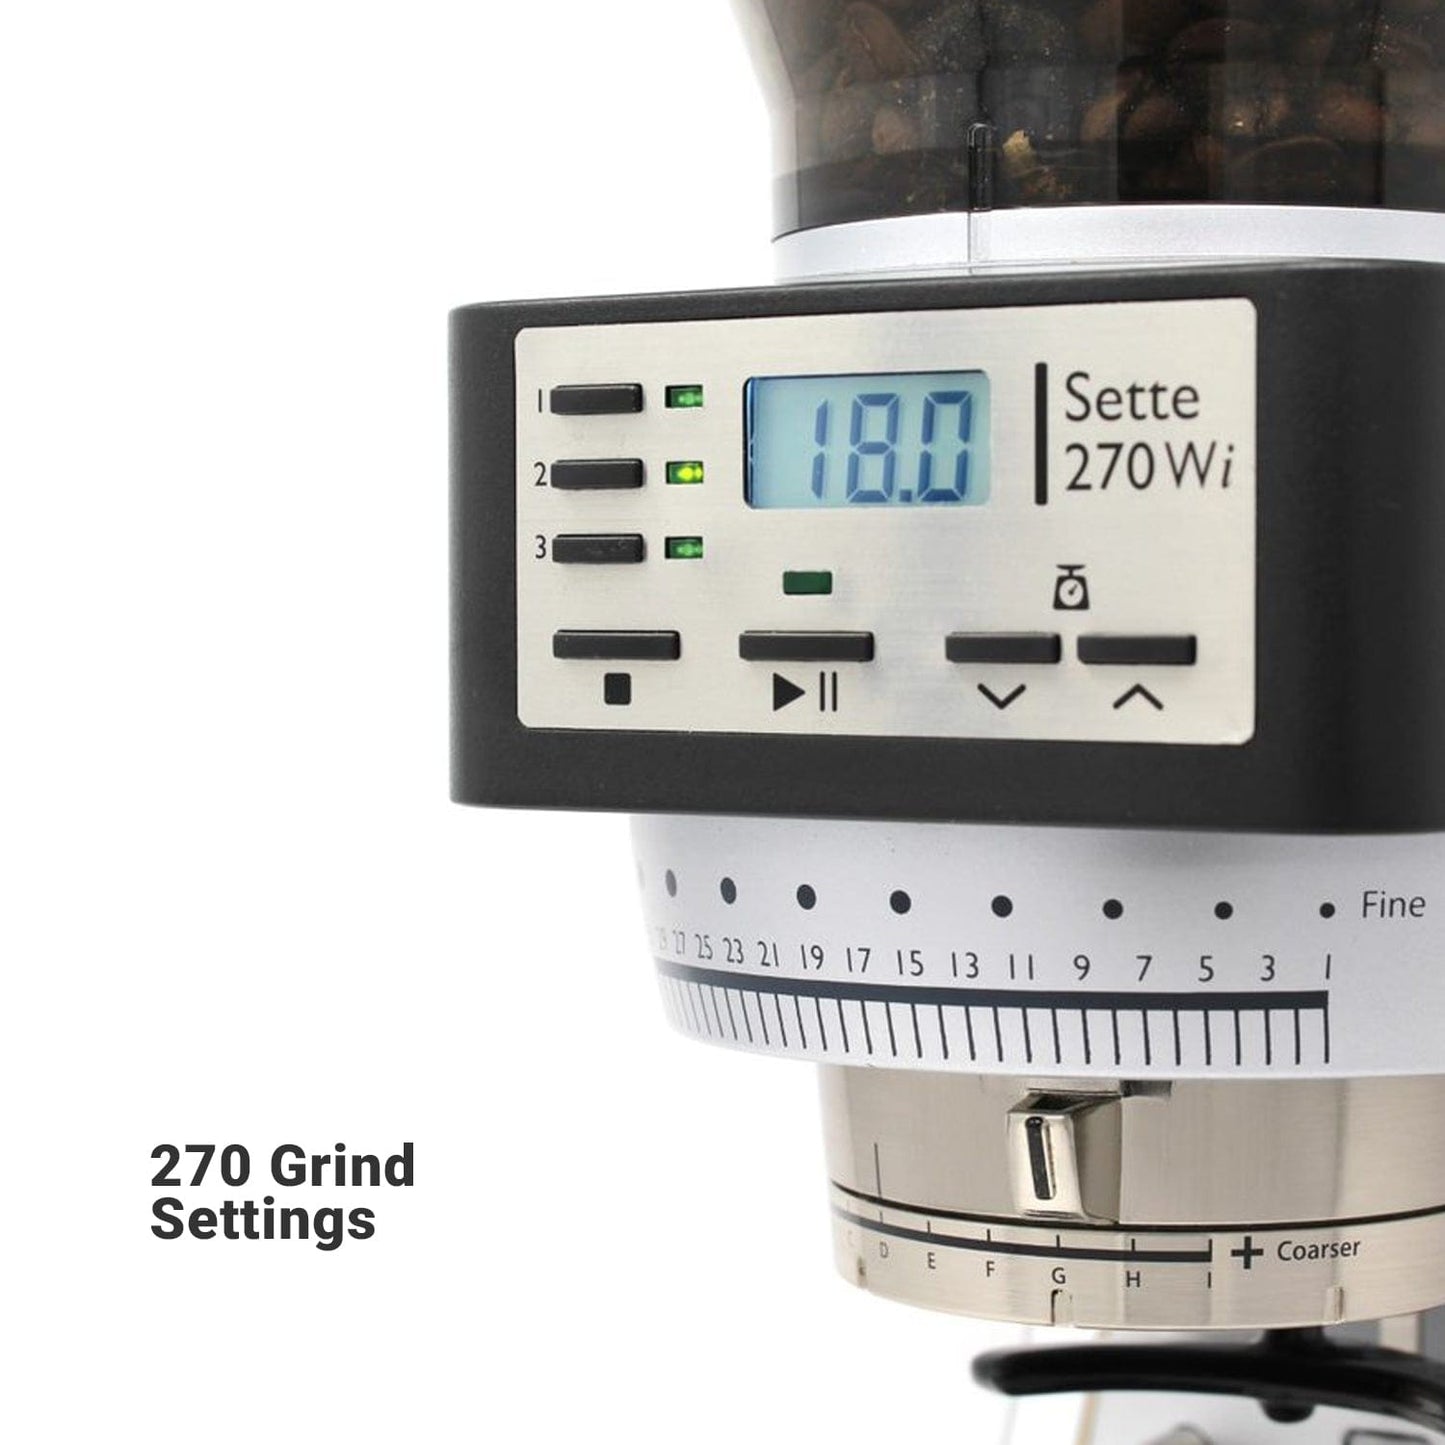 Baratza Electric Grinder Baratza Sette 270 Wi, Coffee Grinder, 220V